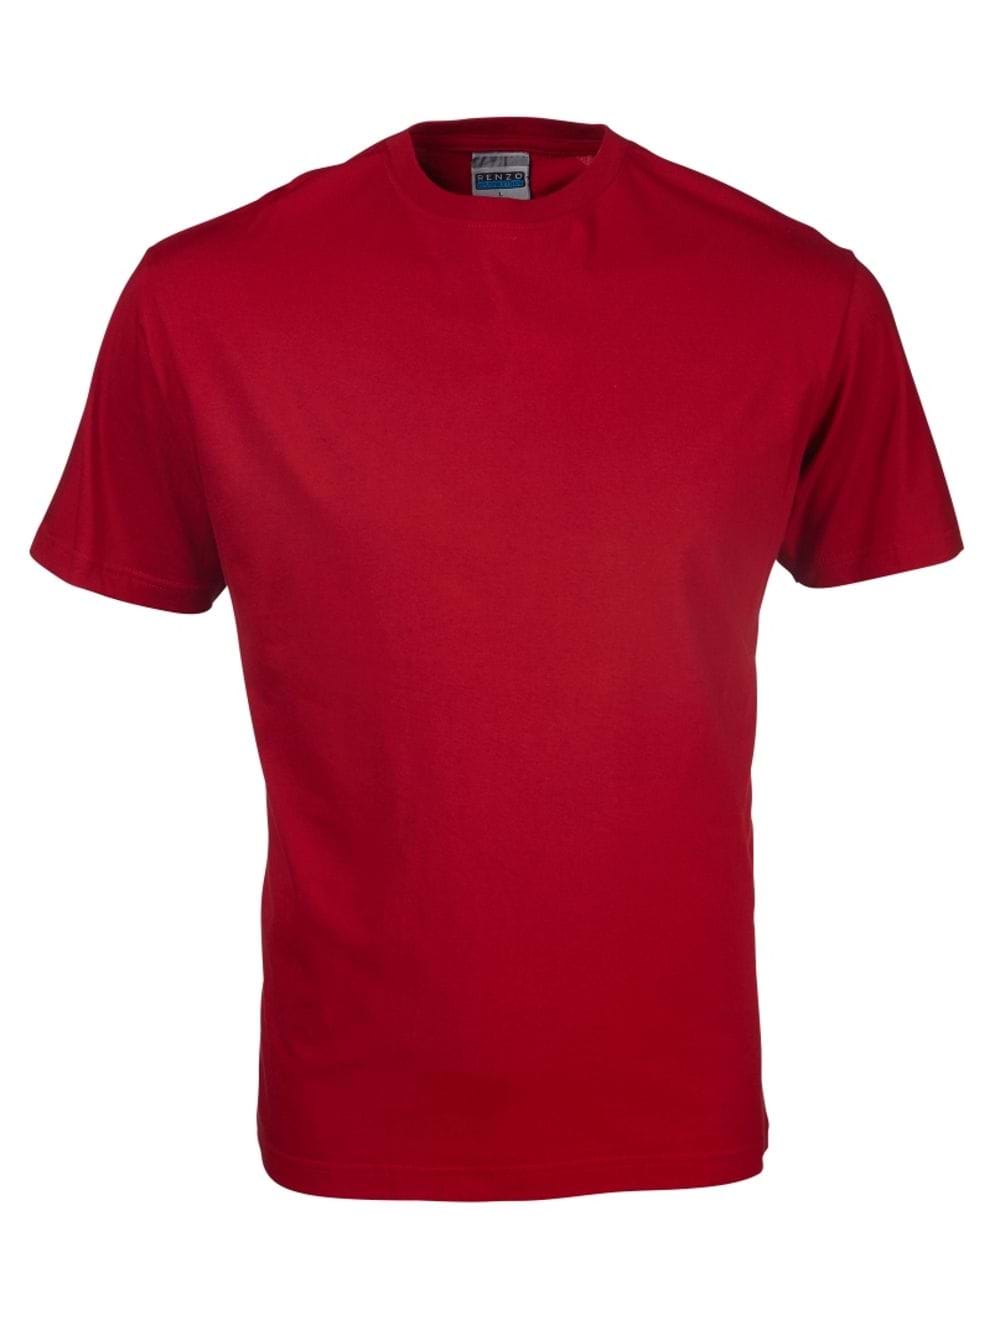 165G Crew Neck T-Shirt - Cerise Red / 2XL